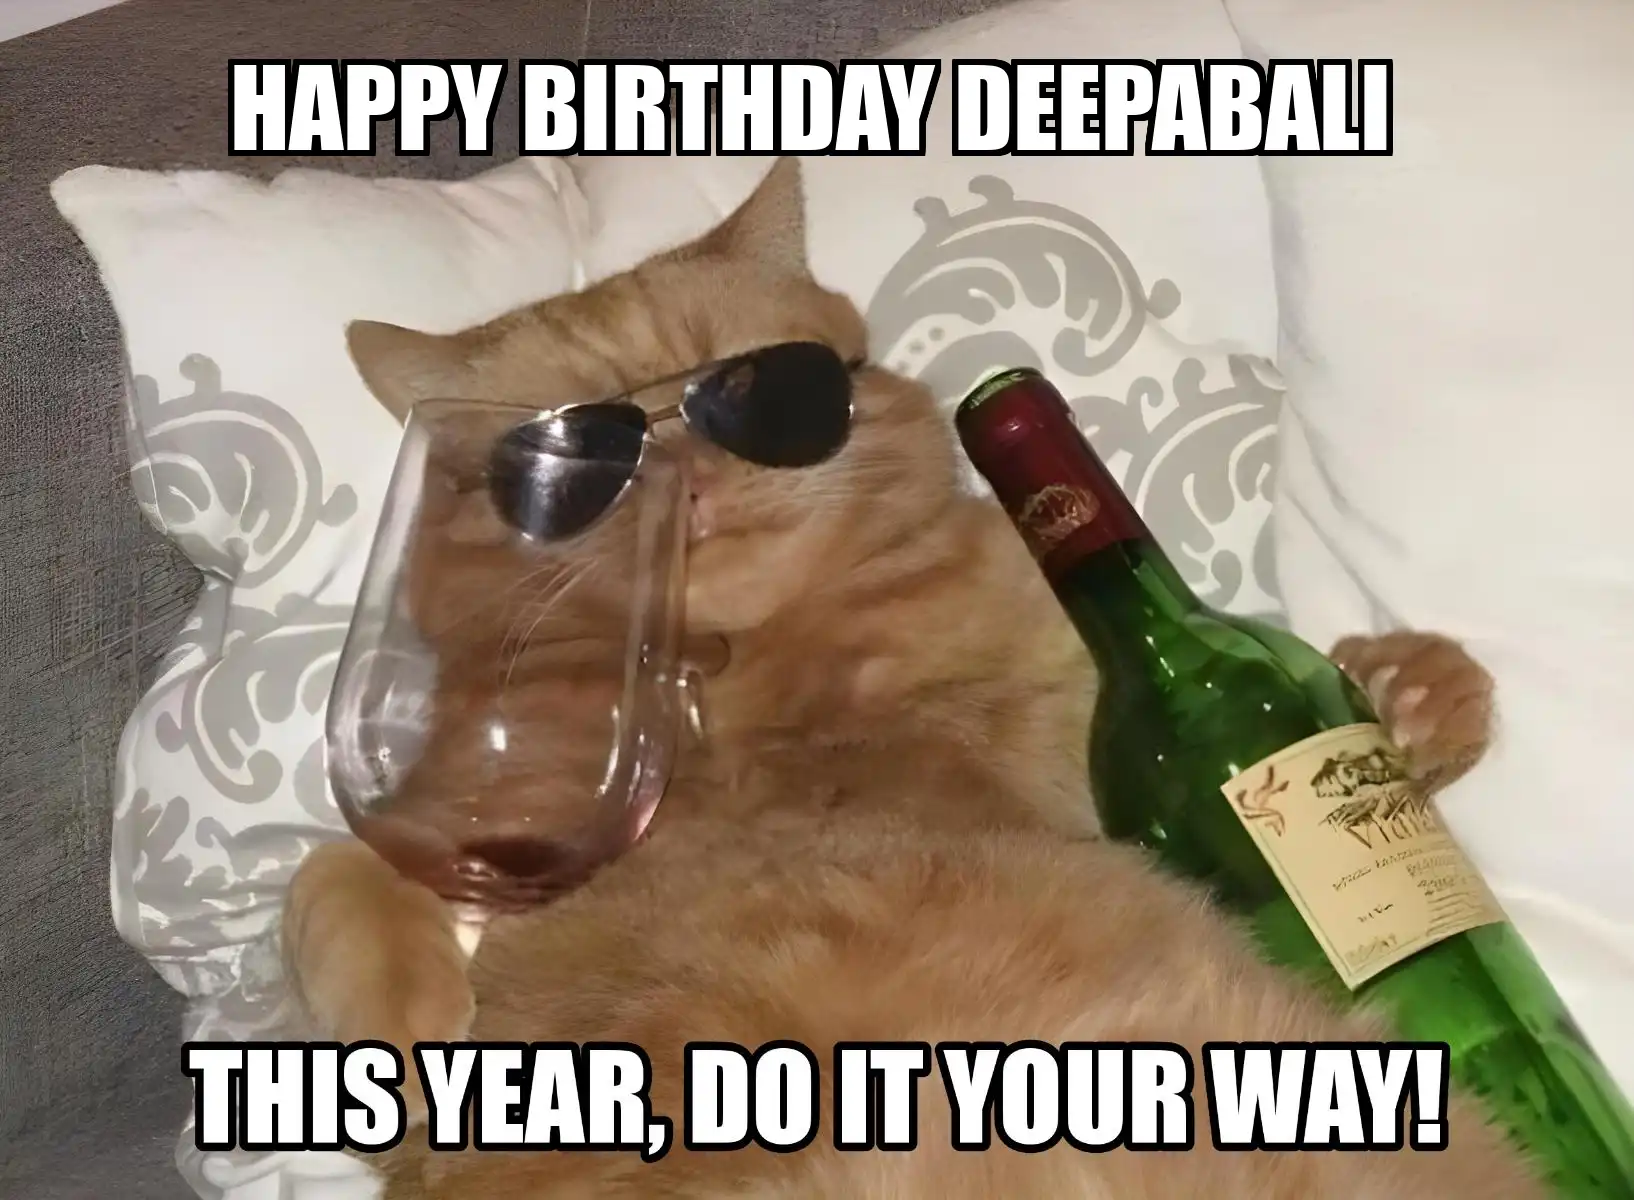 Happy Birthday Deepabali This Year Do It Your Way Meme